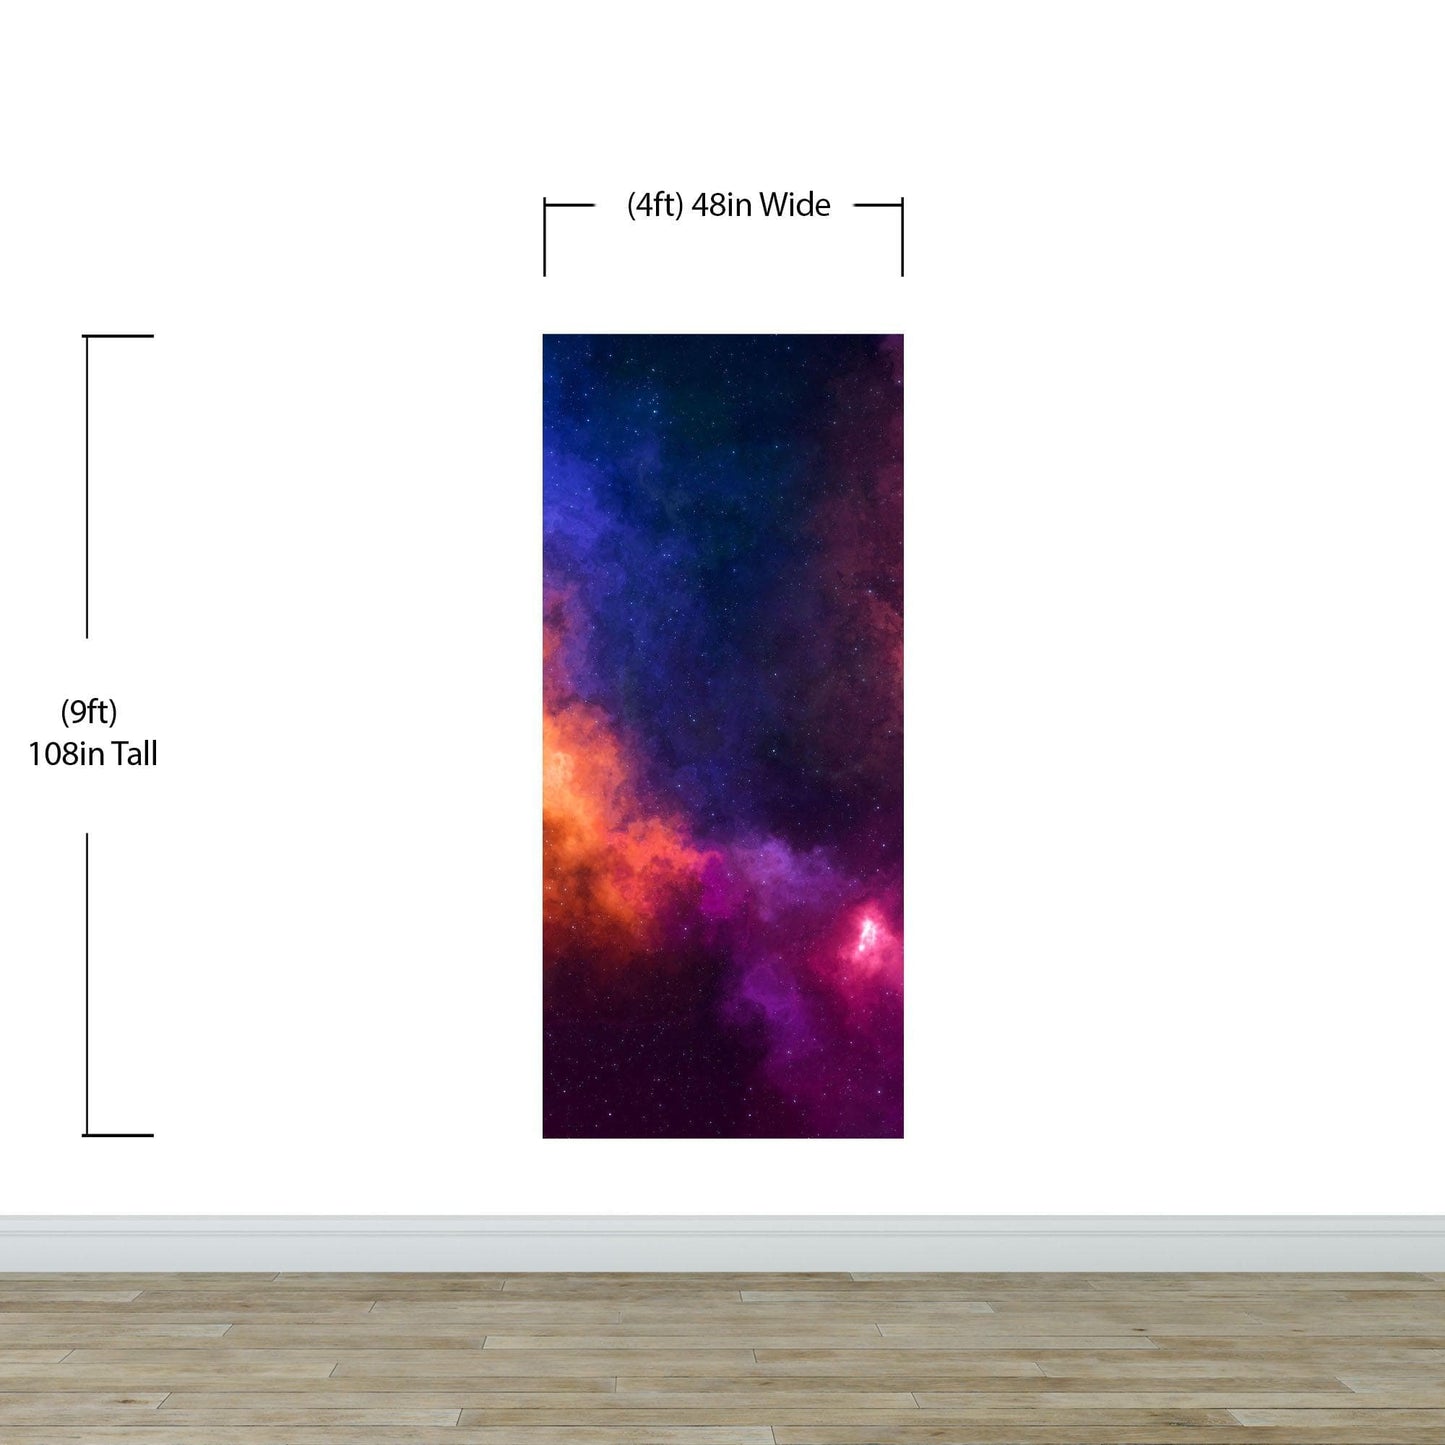 Space Galaxy Nebula Wall Mural Peel and Sticker Wallpaper. #6295